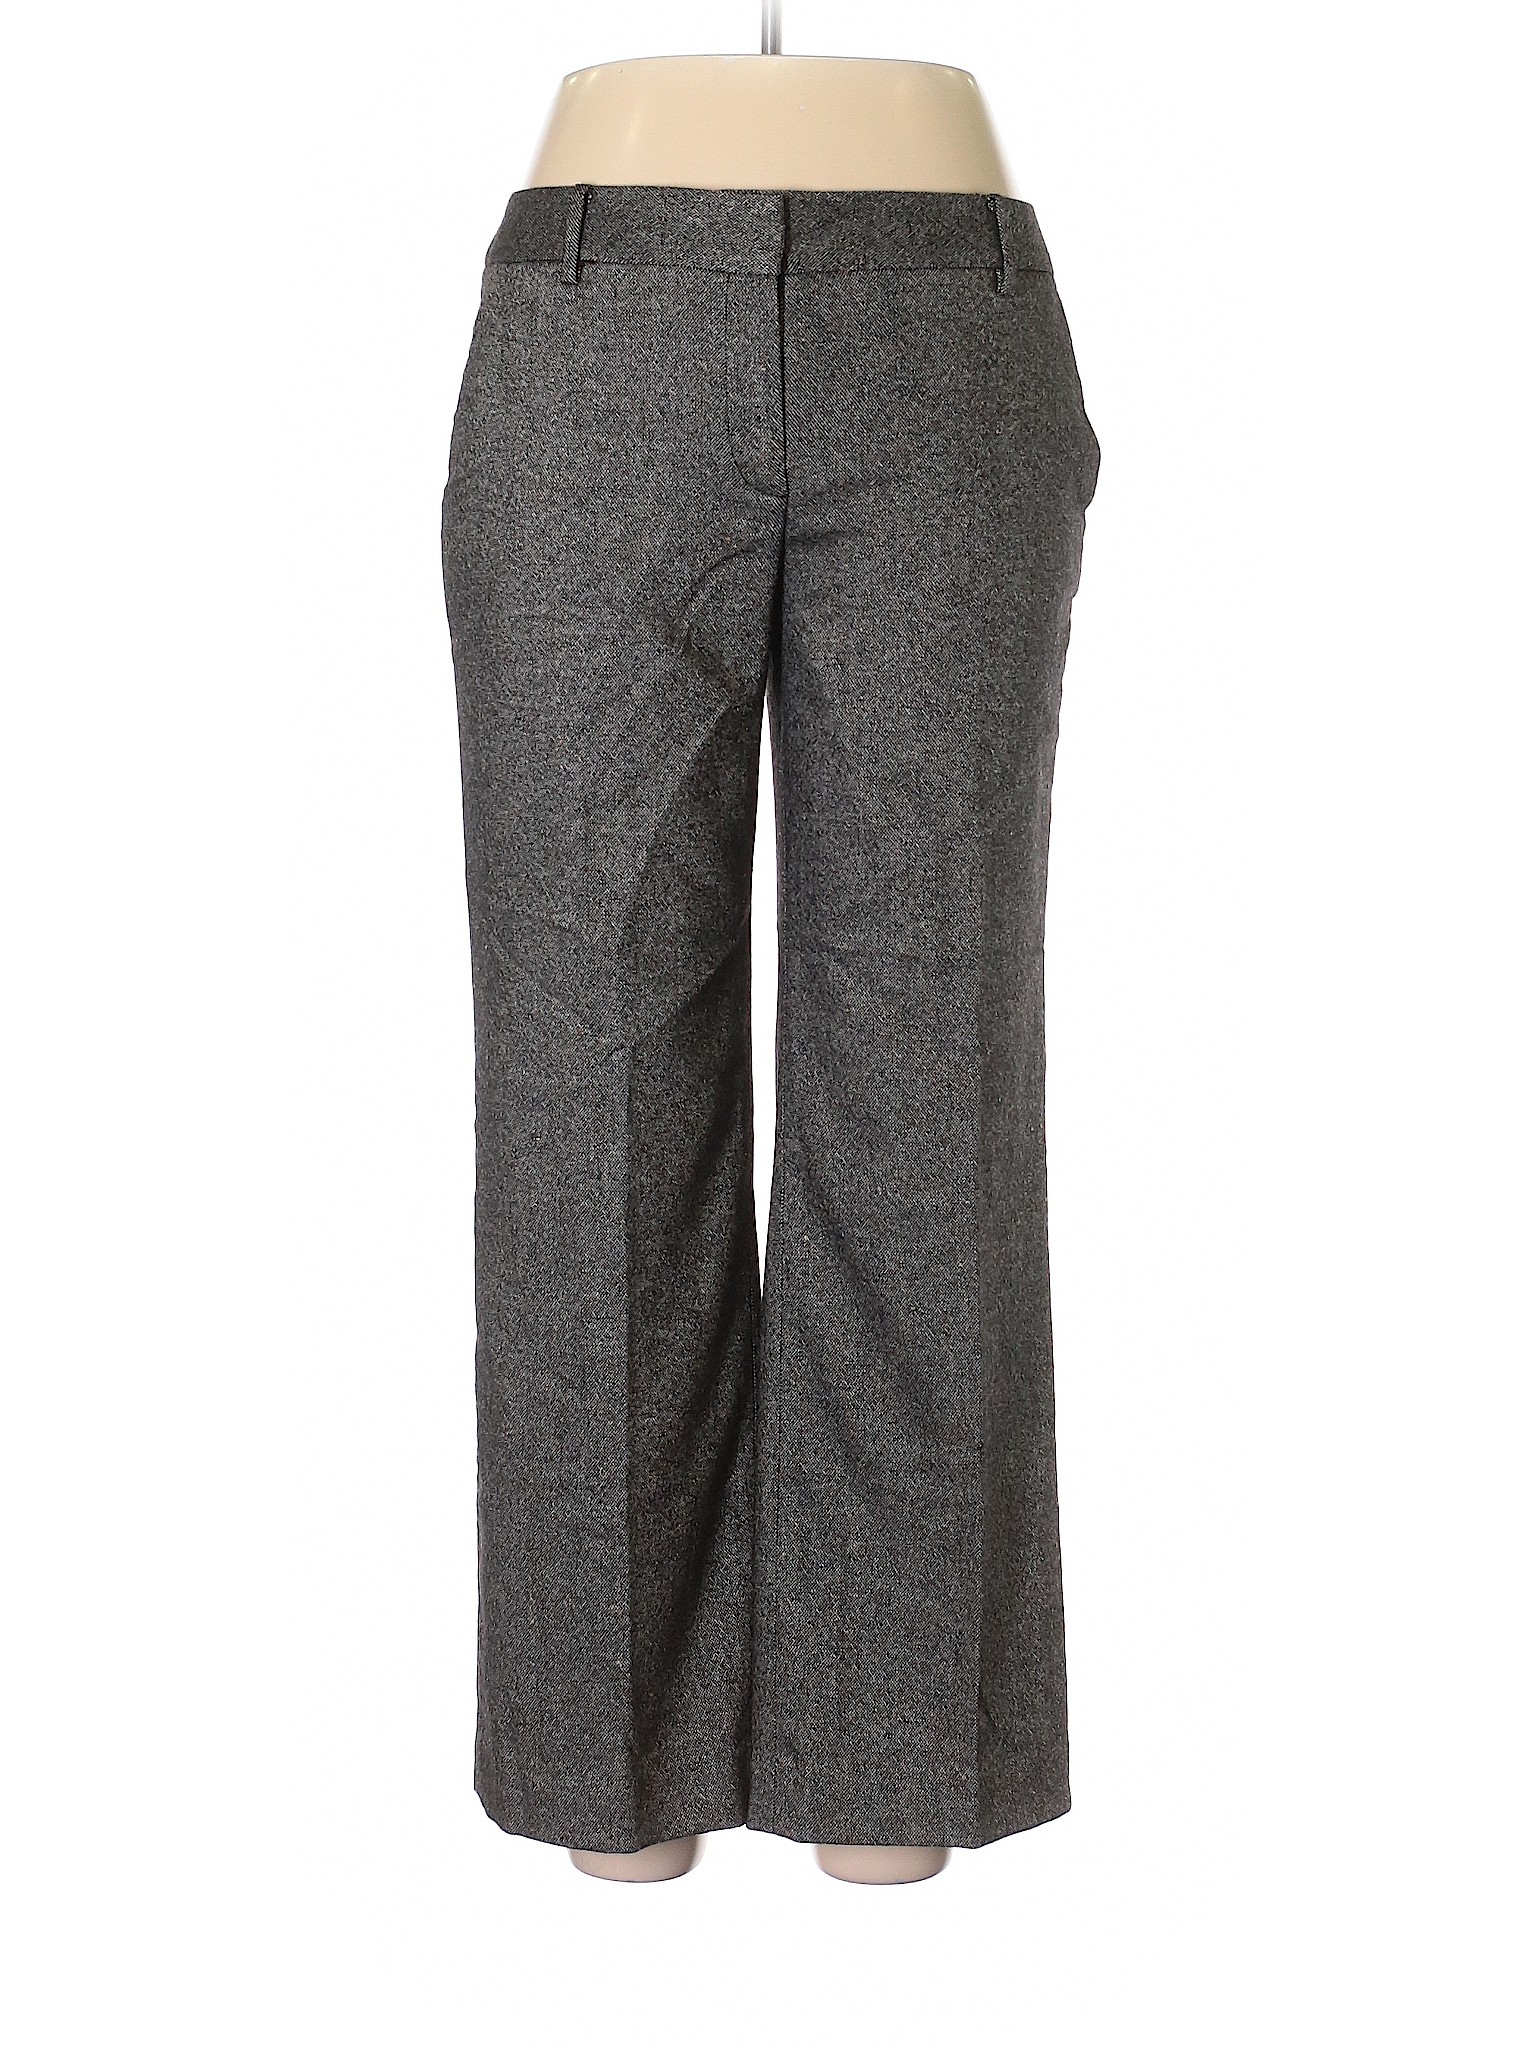 NWT Talbots Women Gray Dress Pants 12 Petites | eBay